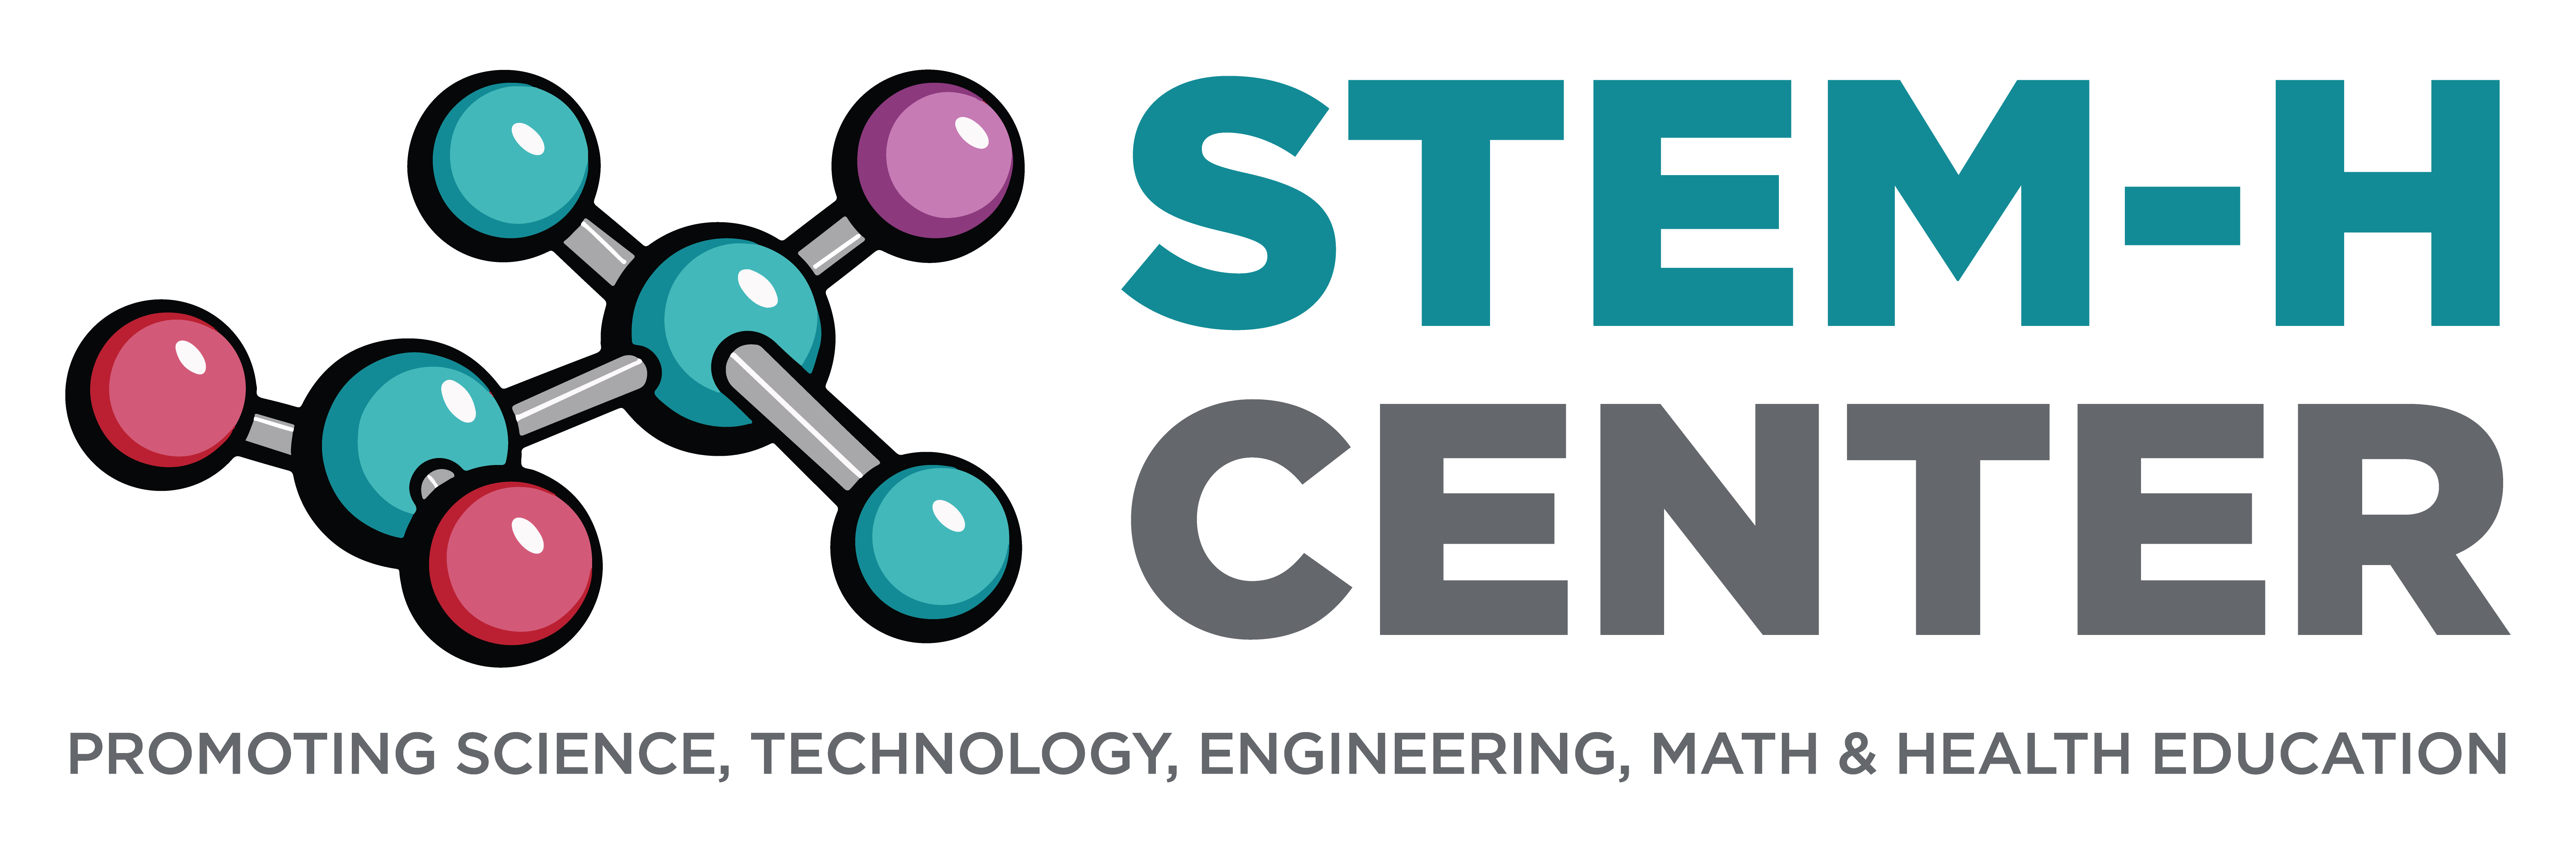 STEM-H Center Graphic